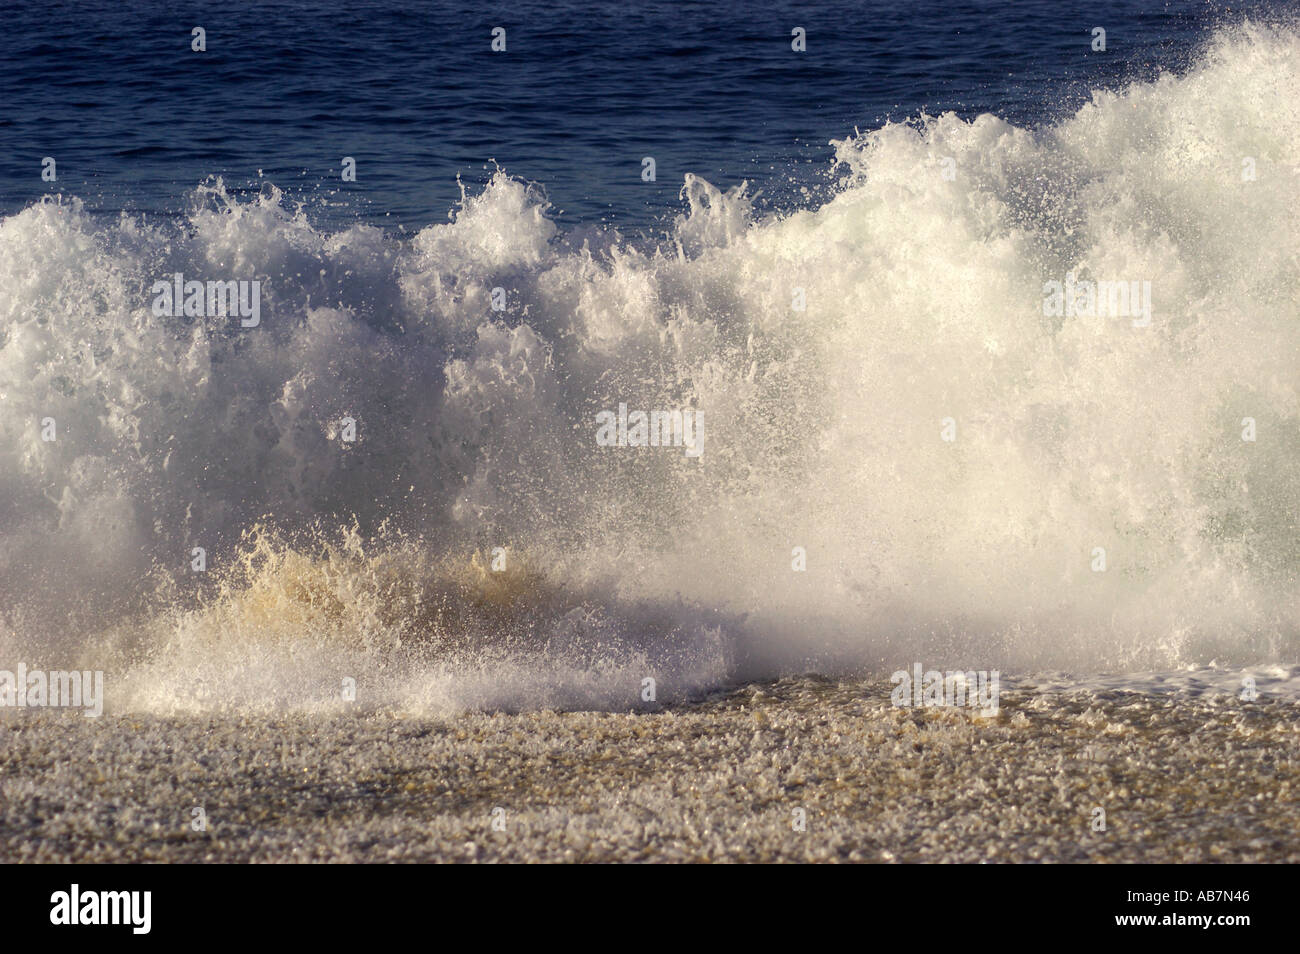 breaking shore break wave Stock Photo